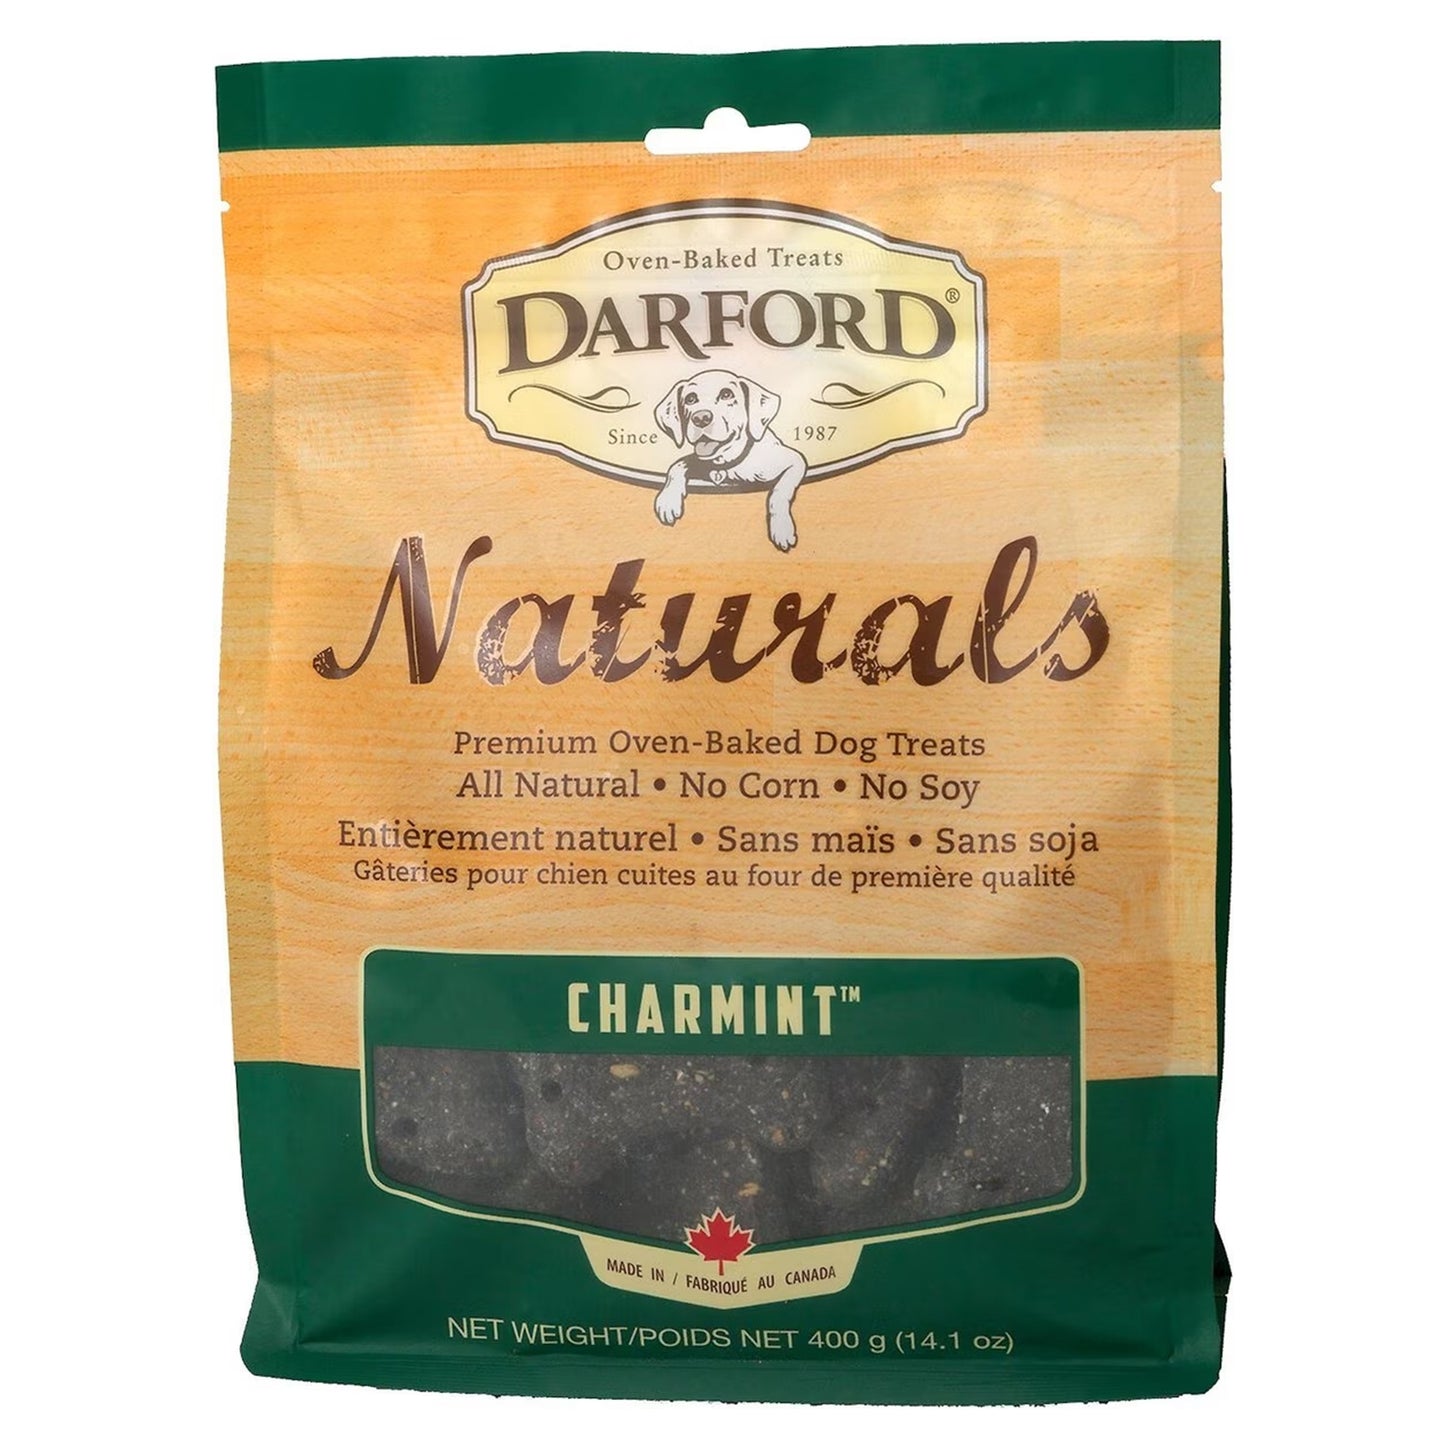 Darford Natural CharMint Biscuits Regular, Charmint, 14 oz, Darford